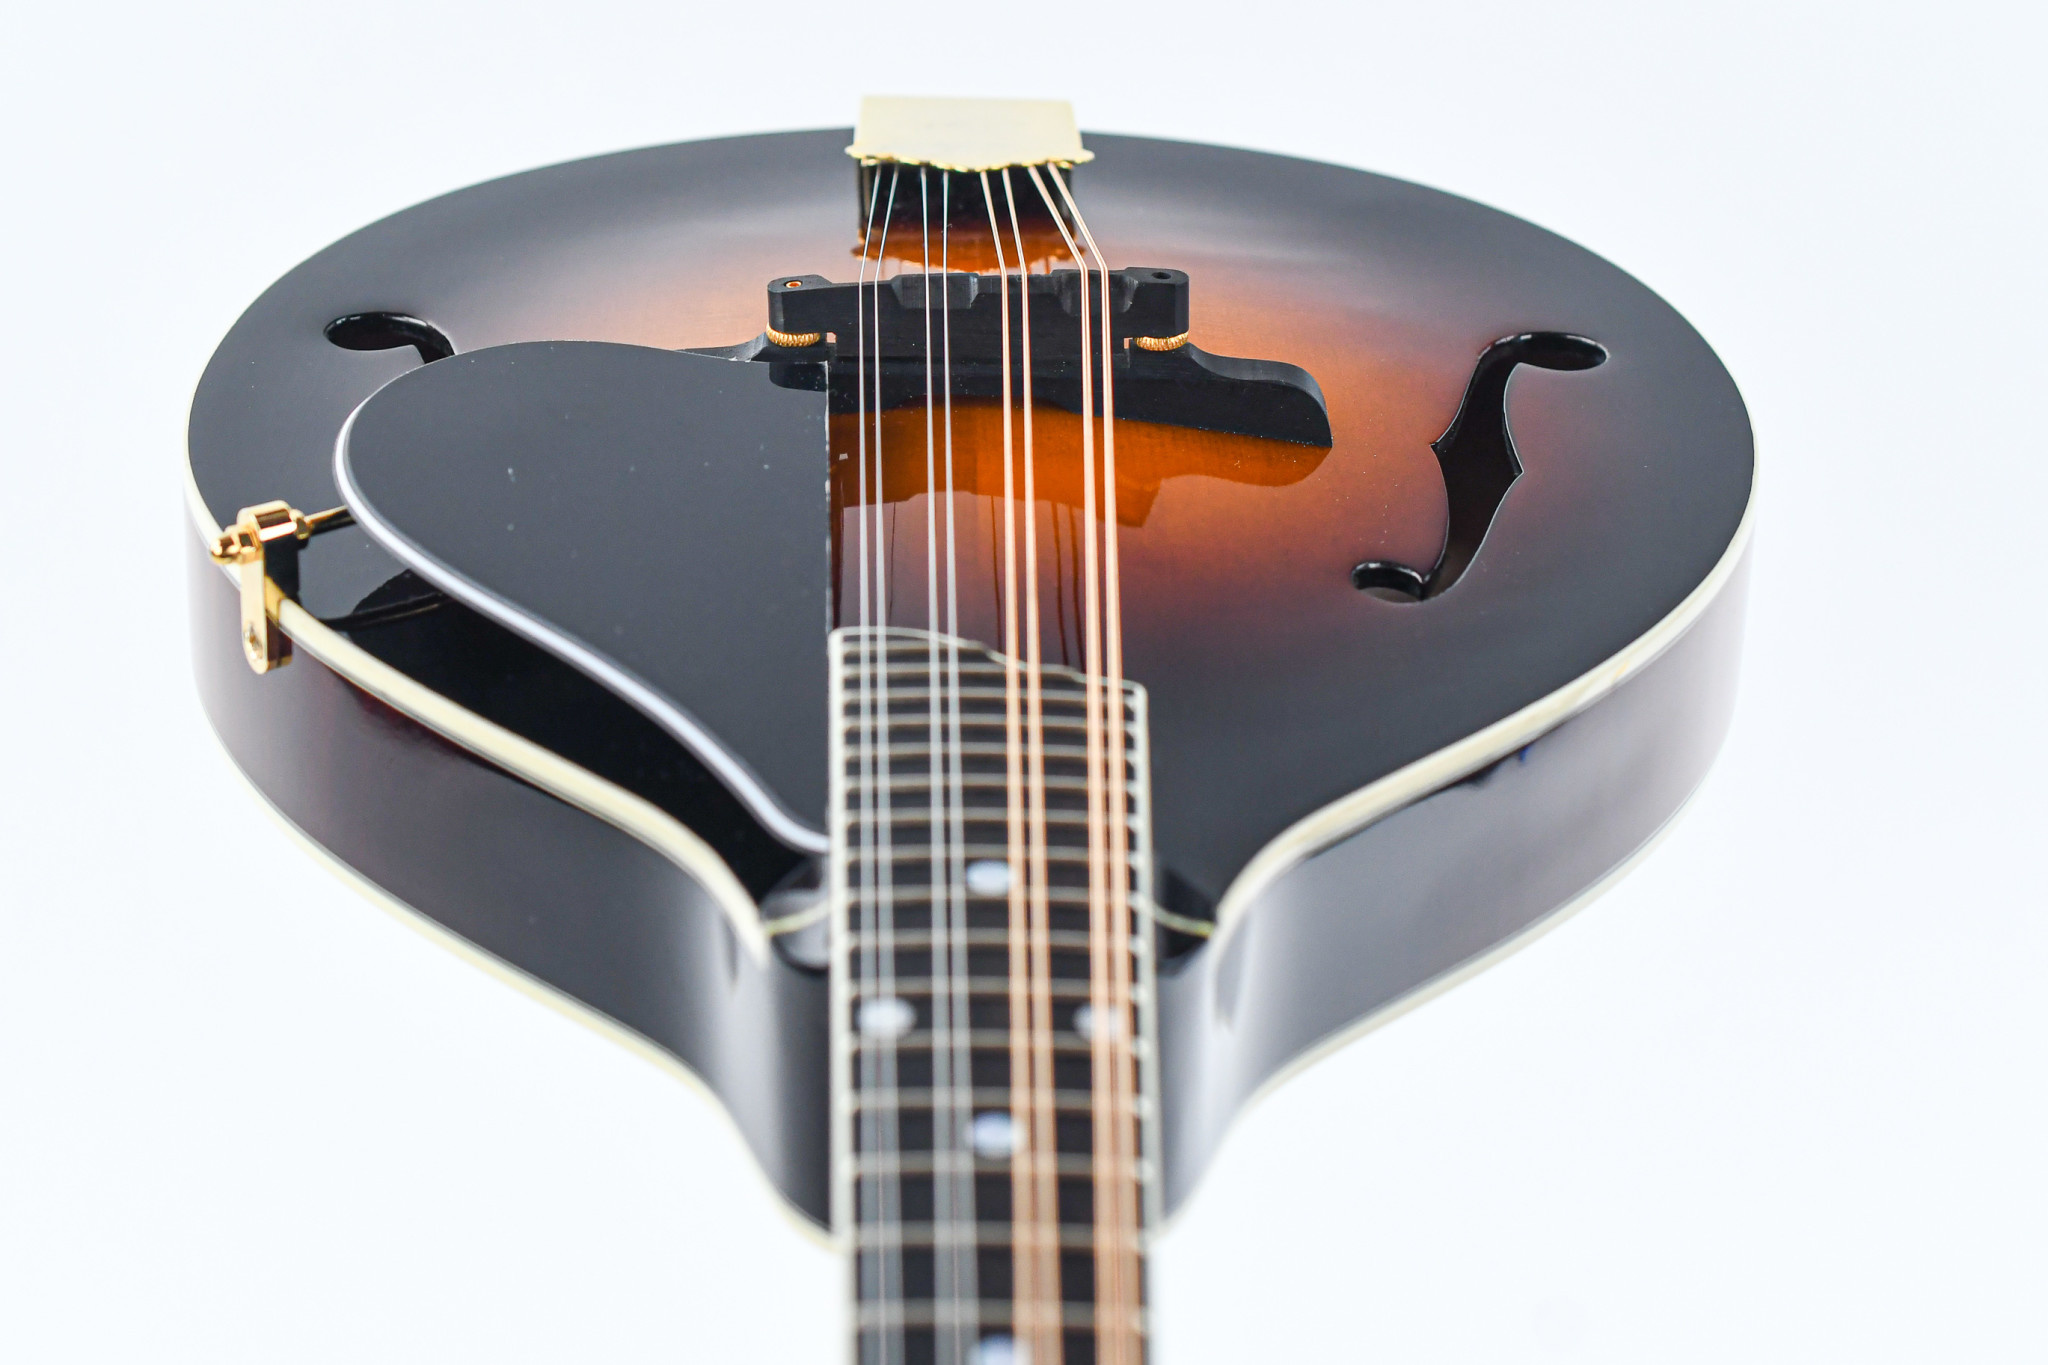 kentucky mandolin tailpiece